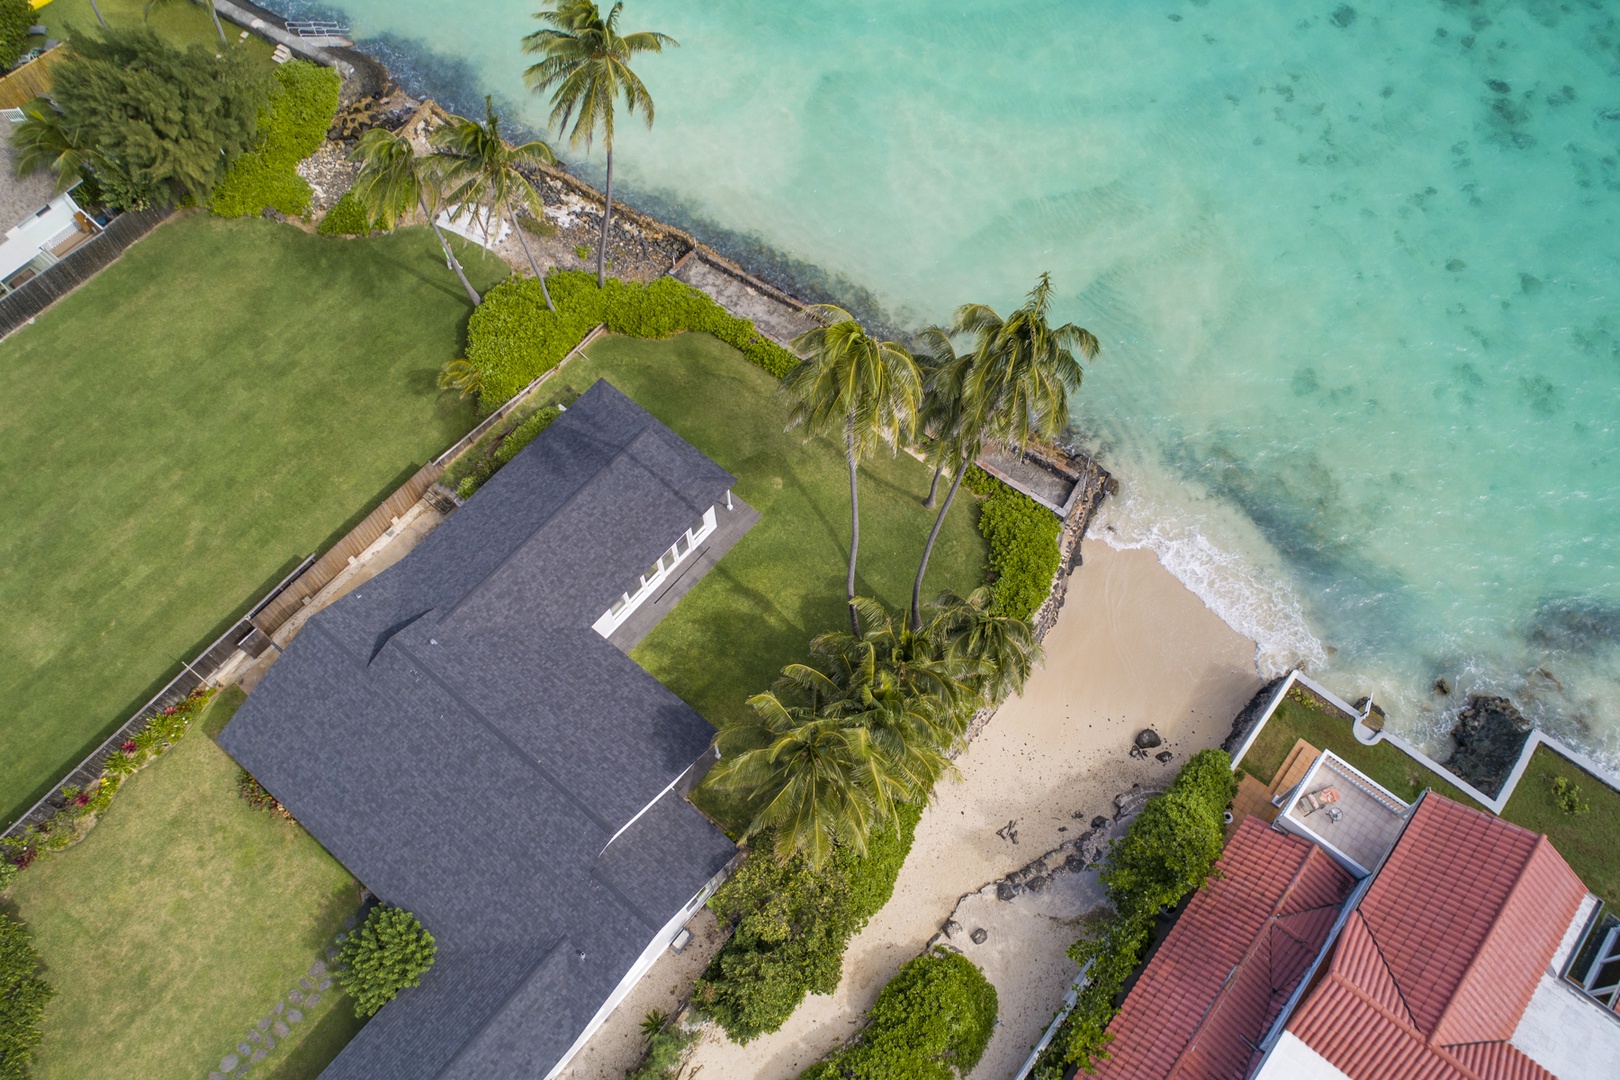 Kailua Vacation Rentals, Lanikai Oceanside 5 Bedroom - Lanikai Oceanside sits adjacent to a public beach access